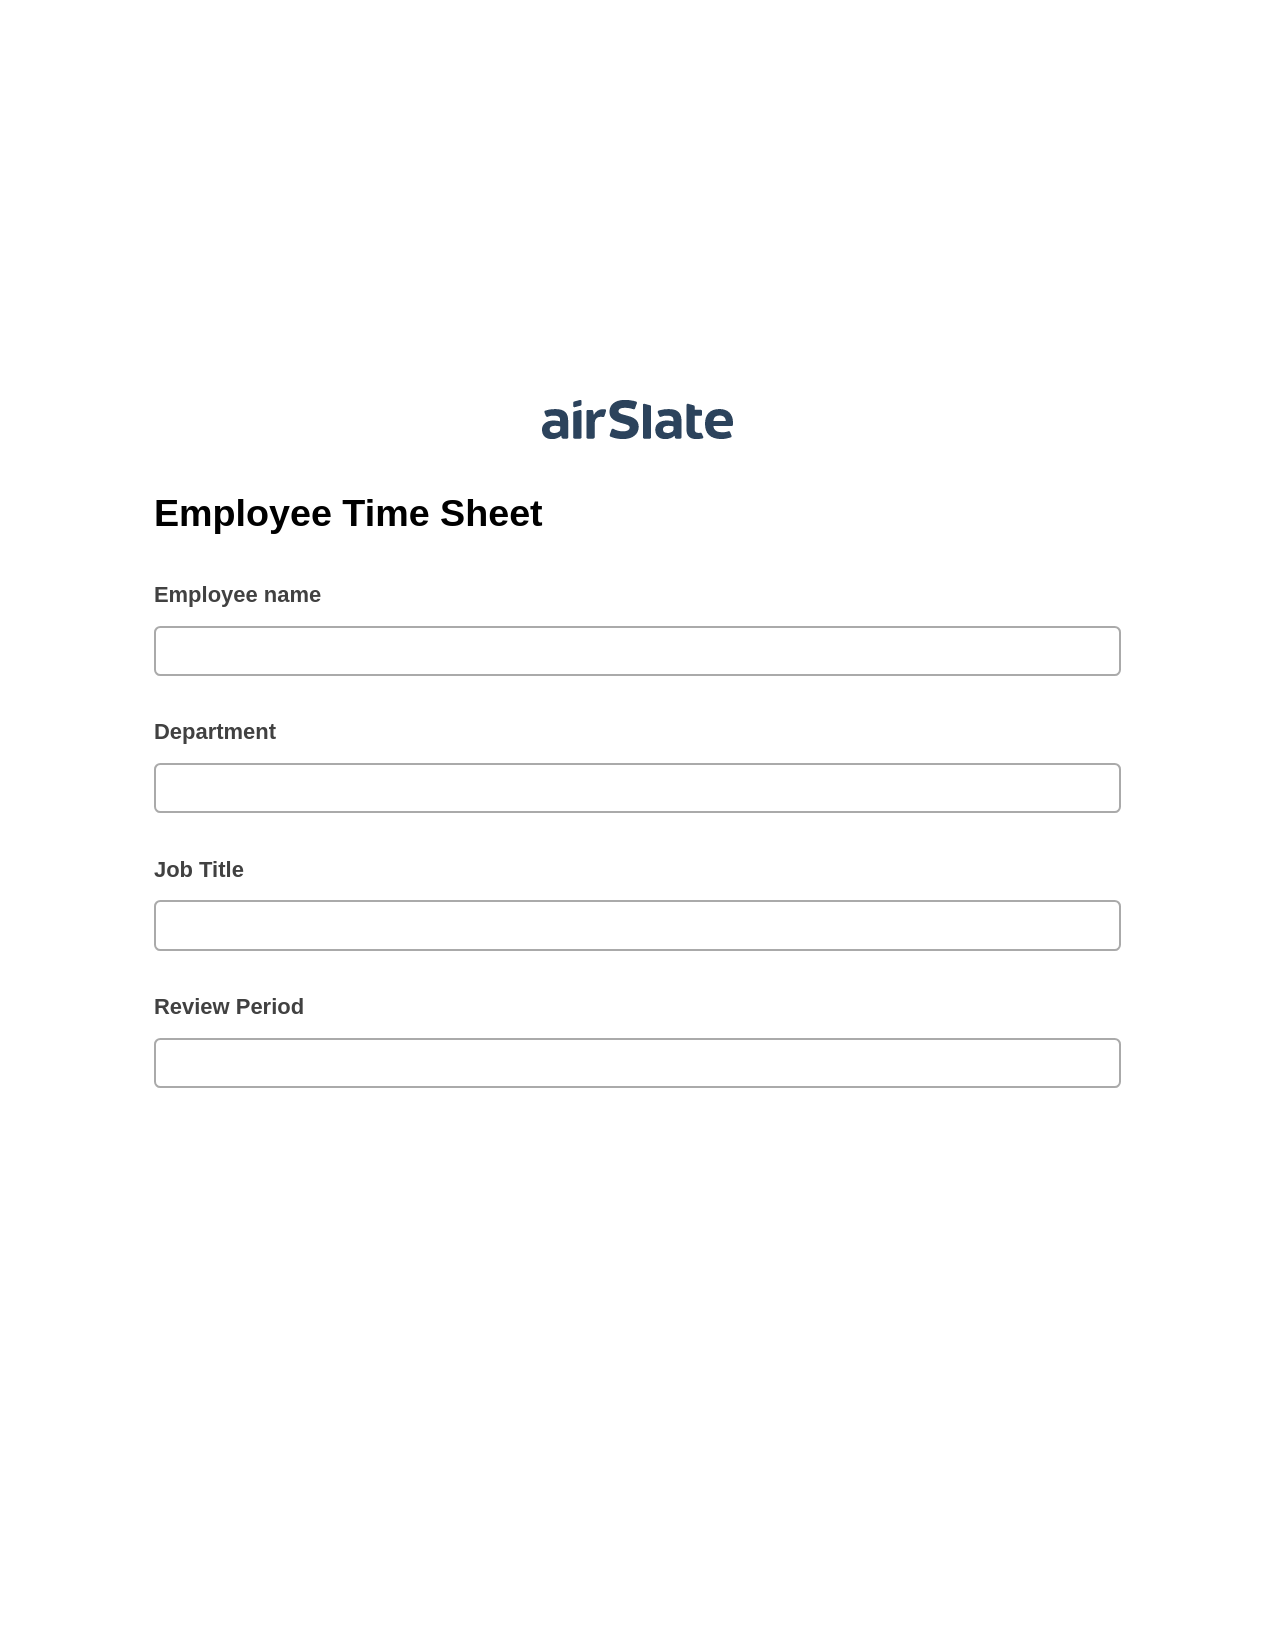 Multirole Employee Time Sheet Pre-fill Dropdowns from Airtable, Jira Bot, Export to Google Sheet Bot